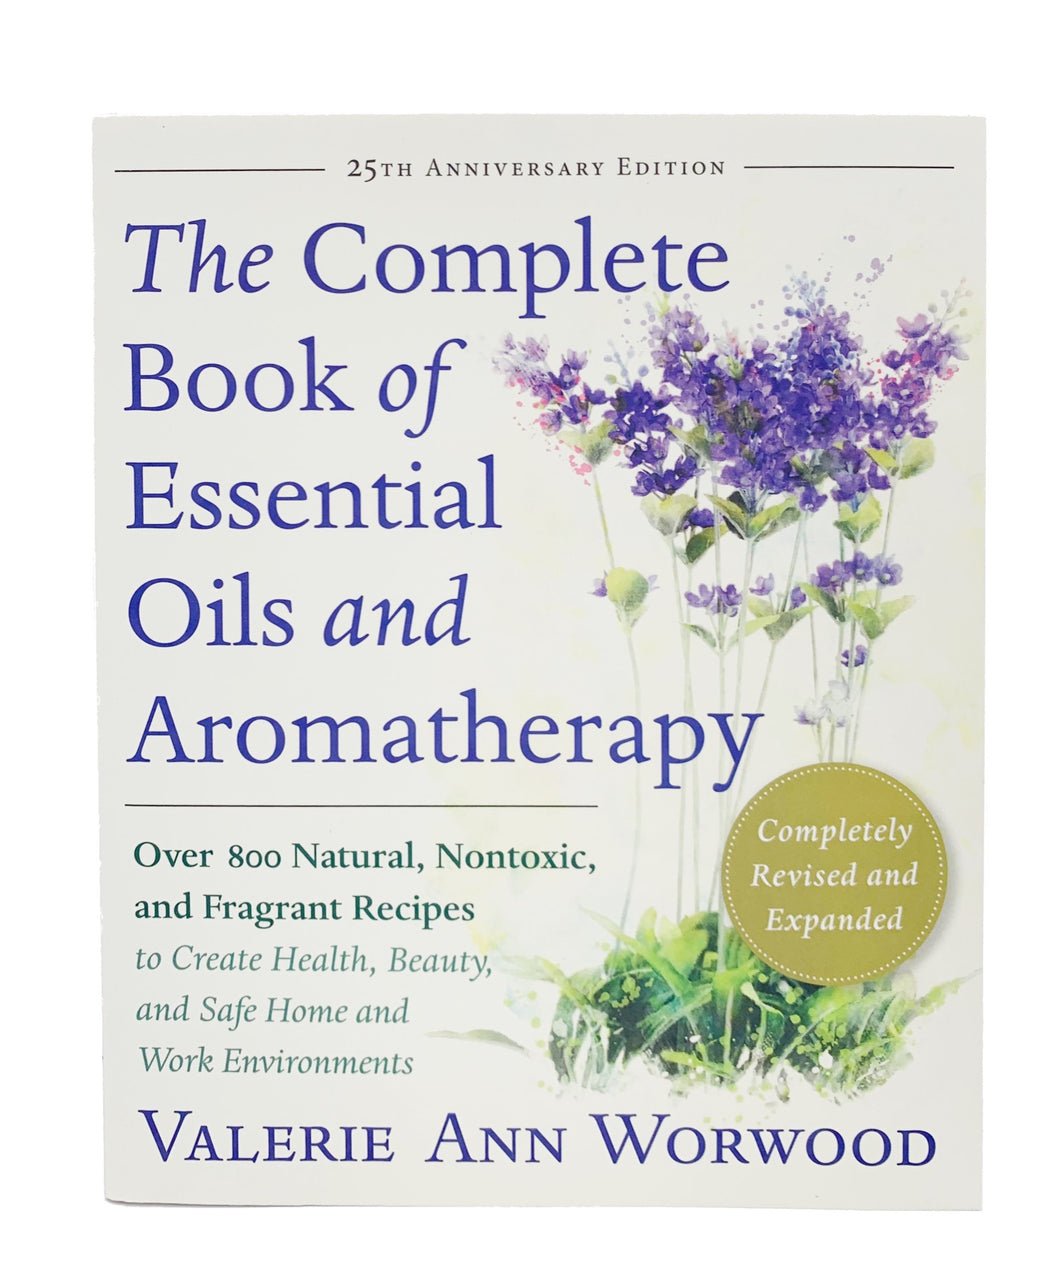 Best aromatherapy book